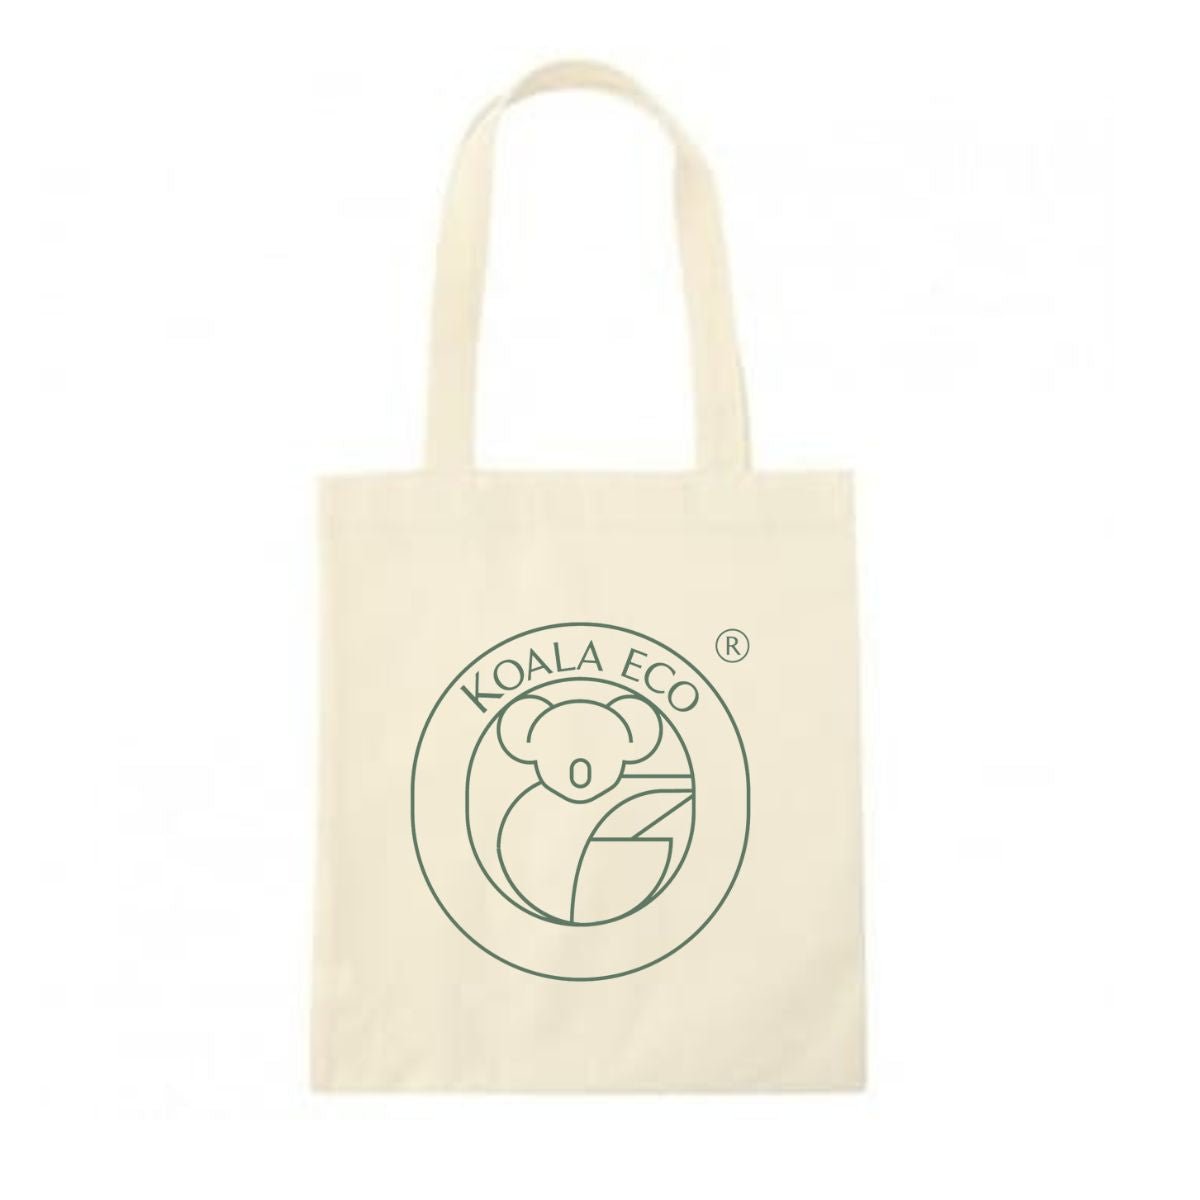 Koala Eco 棉質環保購物袋 - 雪文洋行